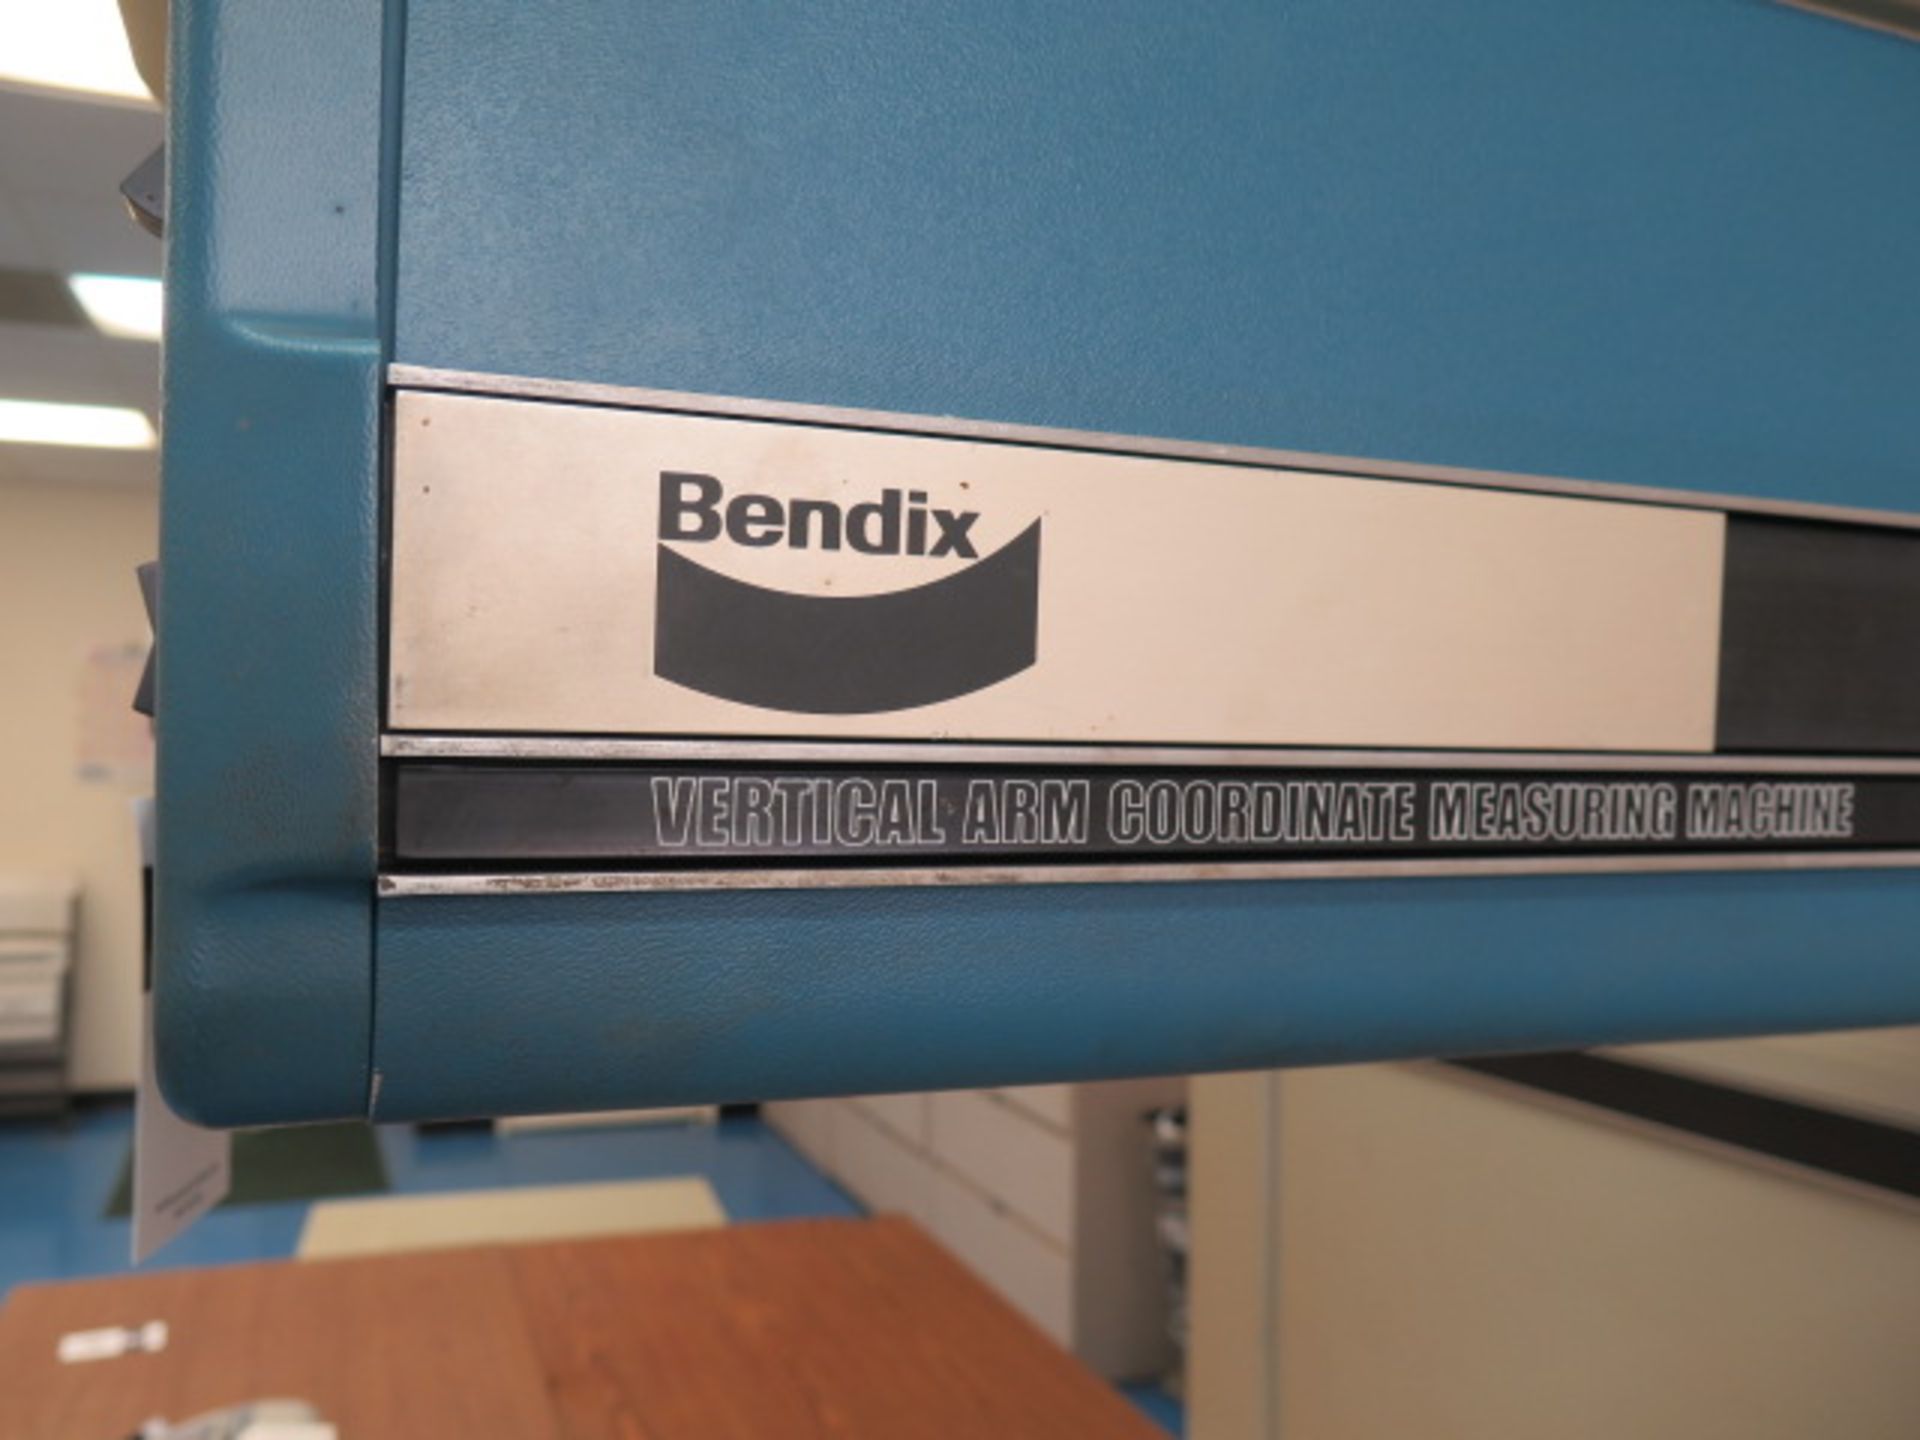 Bendix Cordax 1815 Vertical Arm CMM Machine s/n 2-3990-0882 w/ Renishaw MIP Probe Head, SOLD AS IS - Image 4 of 12